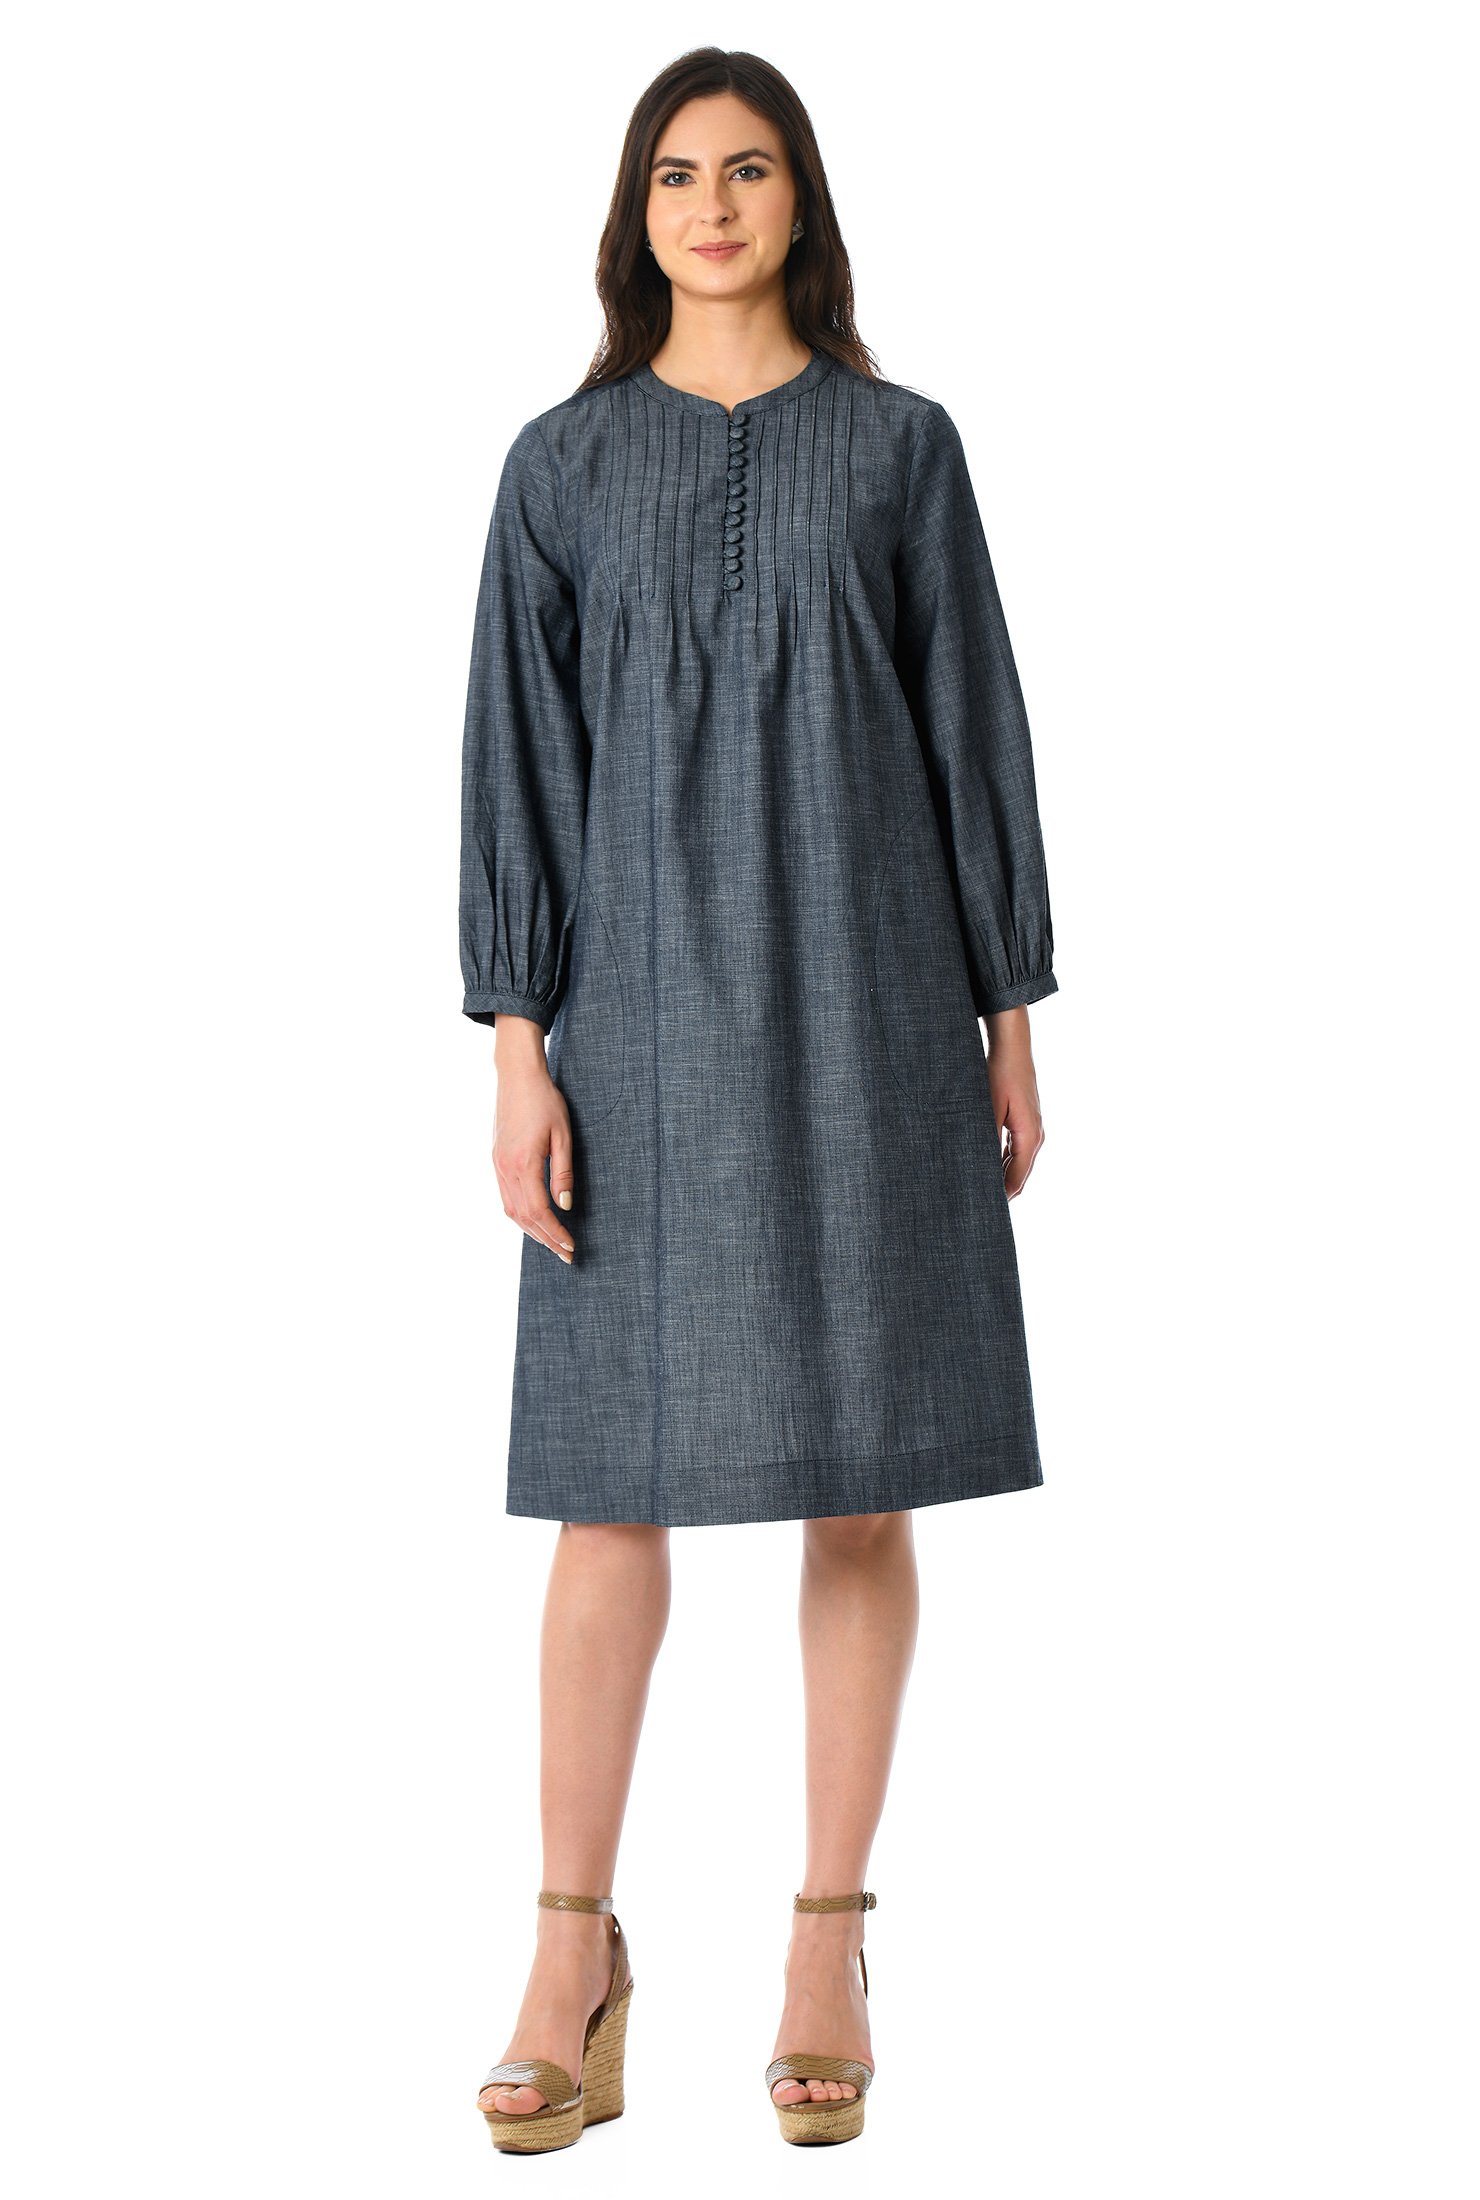 Shop Pintuck pleat cotton chambray shift dress | eShakti